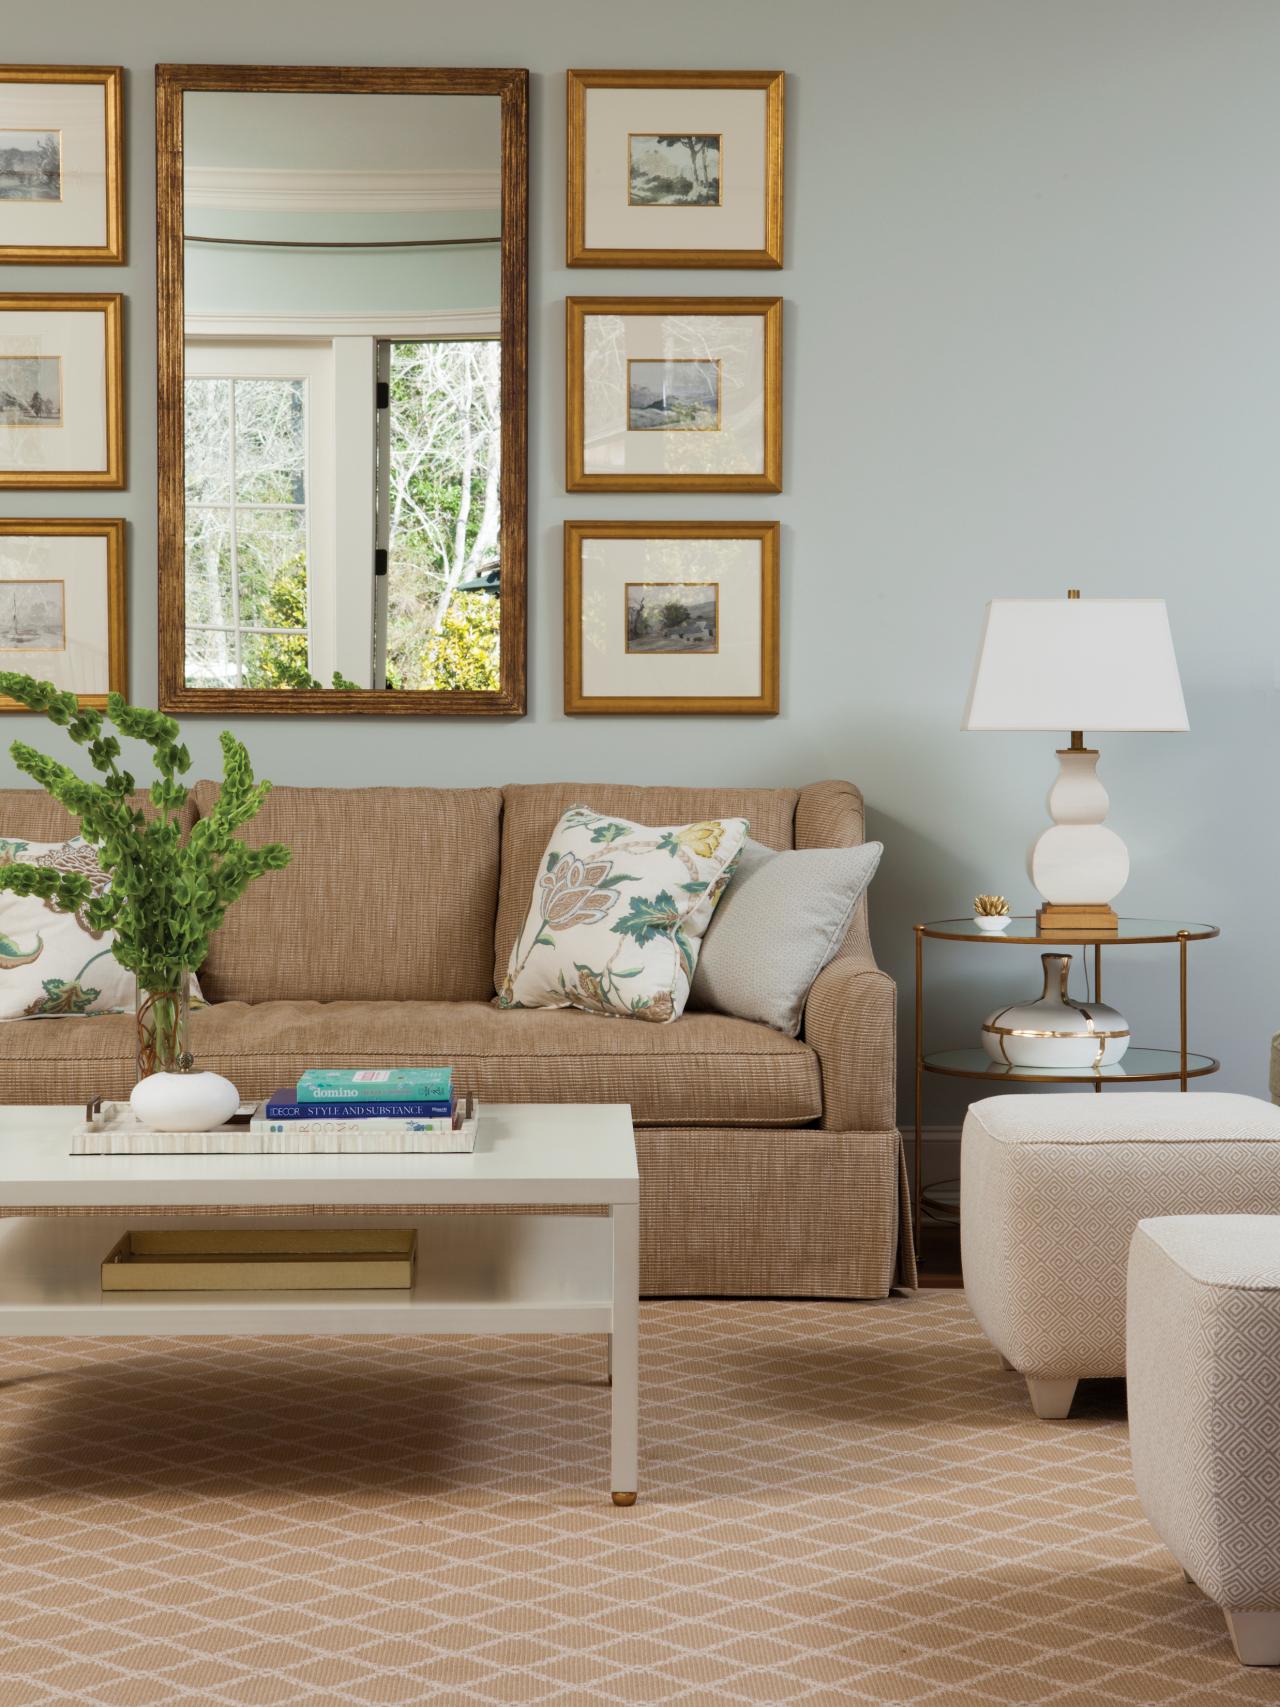 Light Blue Living Room is Airy, Cozy | HGTV